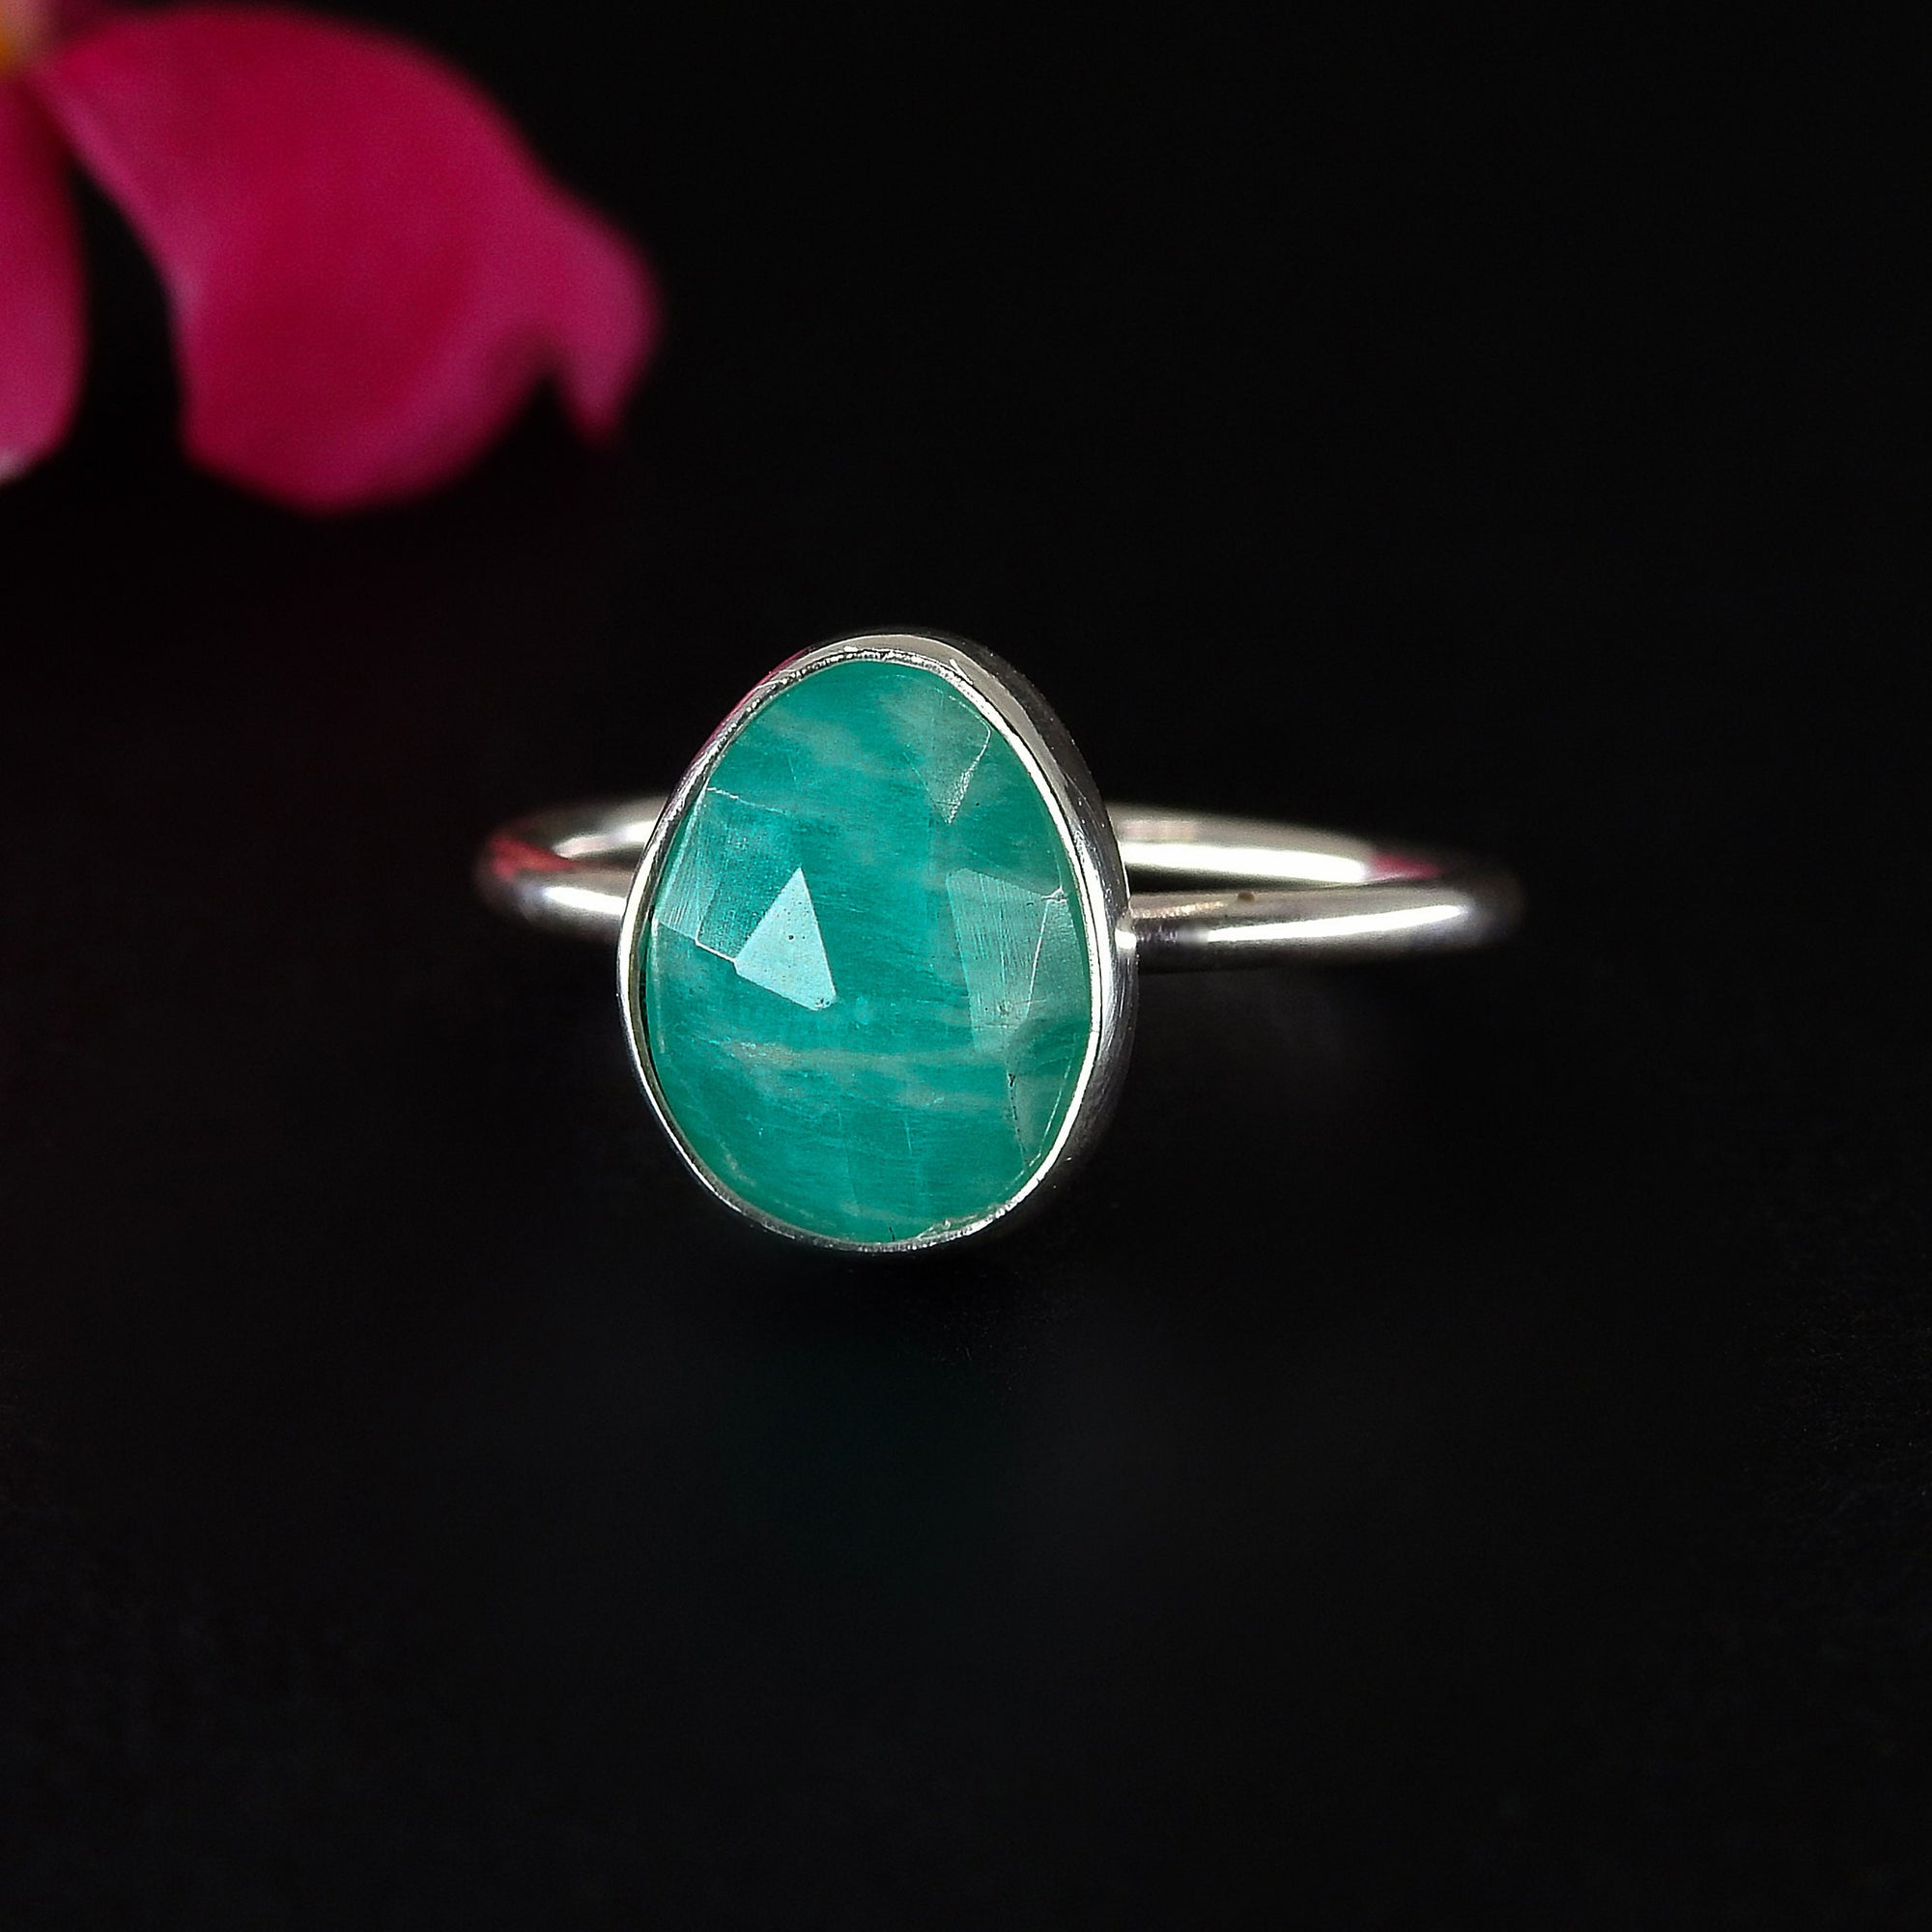 Rose Cut Amazonite Ring - Size 8 - Sterling Silver - Faceted Amazonite Jewelry - Teal Green Amazonite Ring - OOAK Dainty Amazonite Jewellery